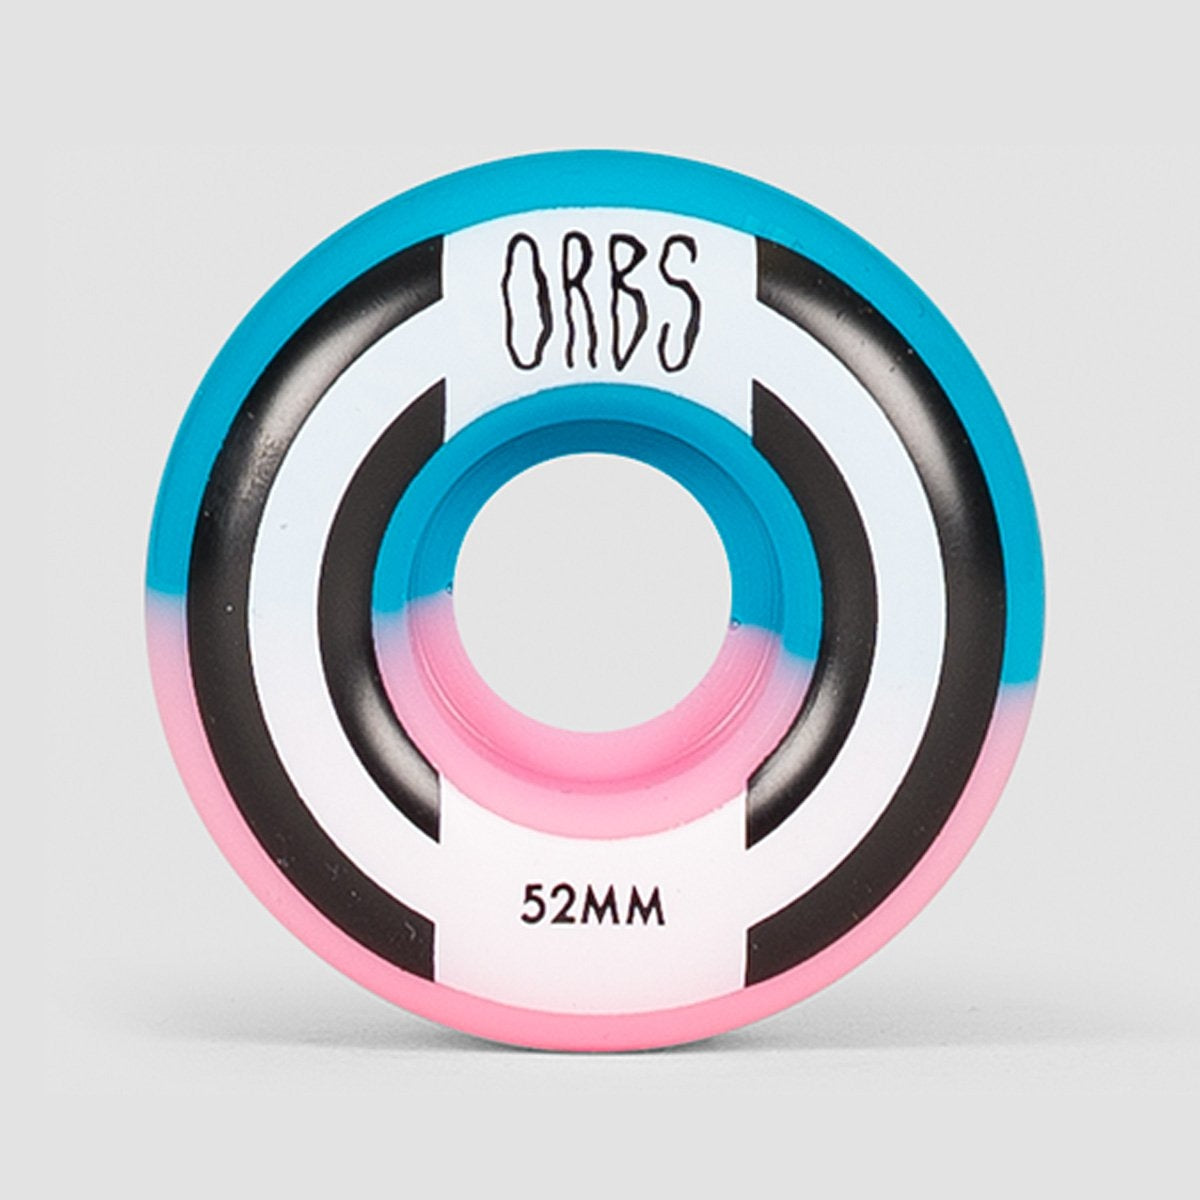 Welcome Orbs Apparitions Splits Wheels Pink/Blue 52mm - Skateboard